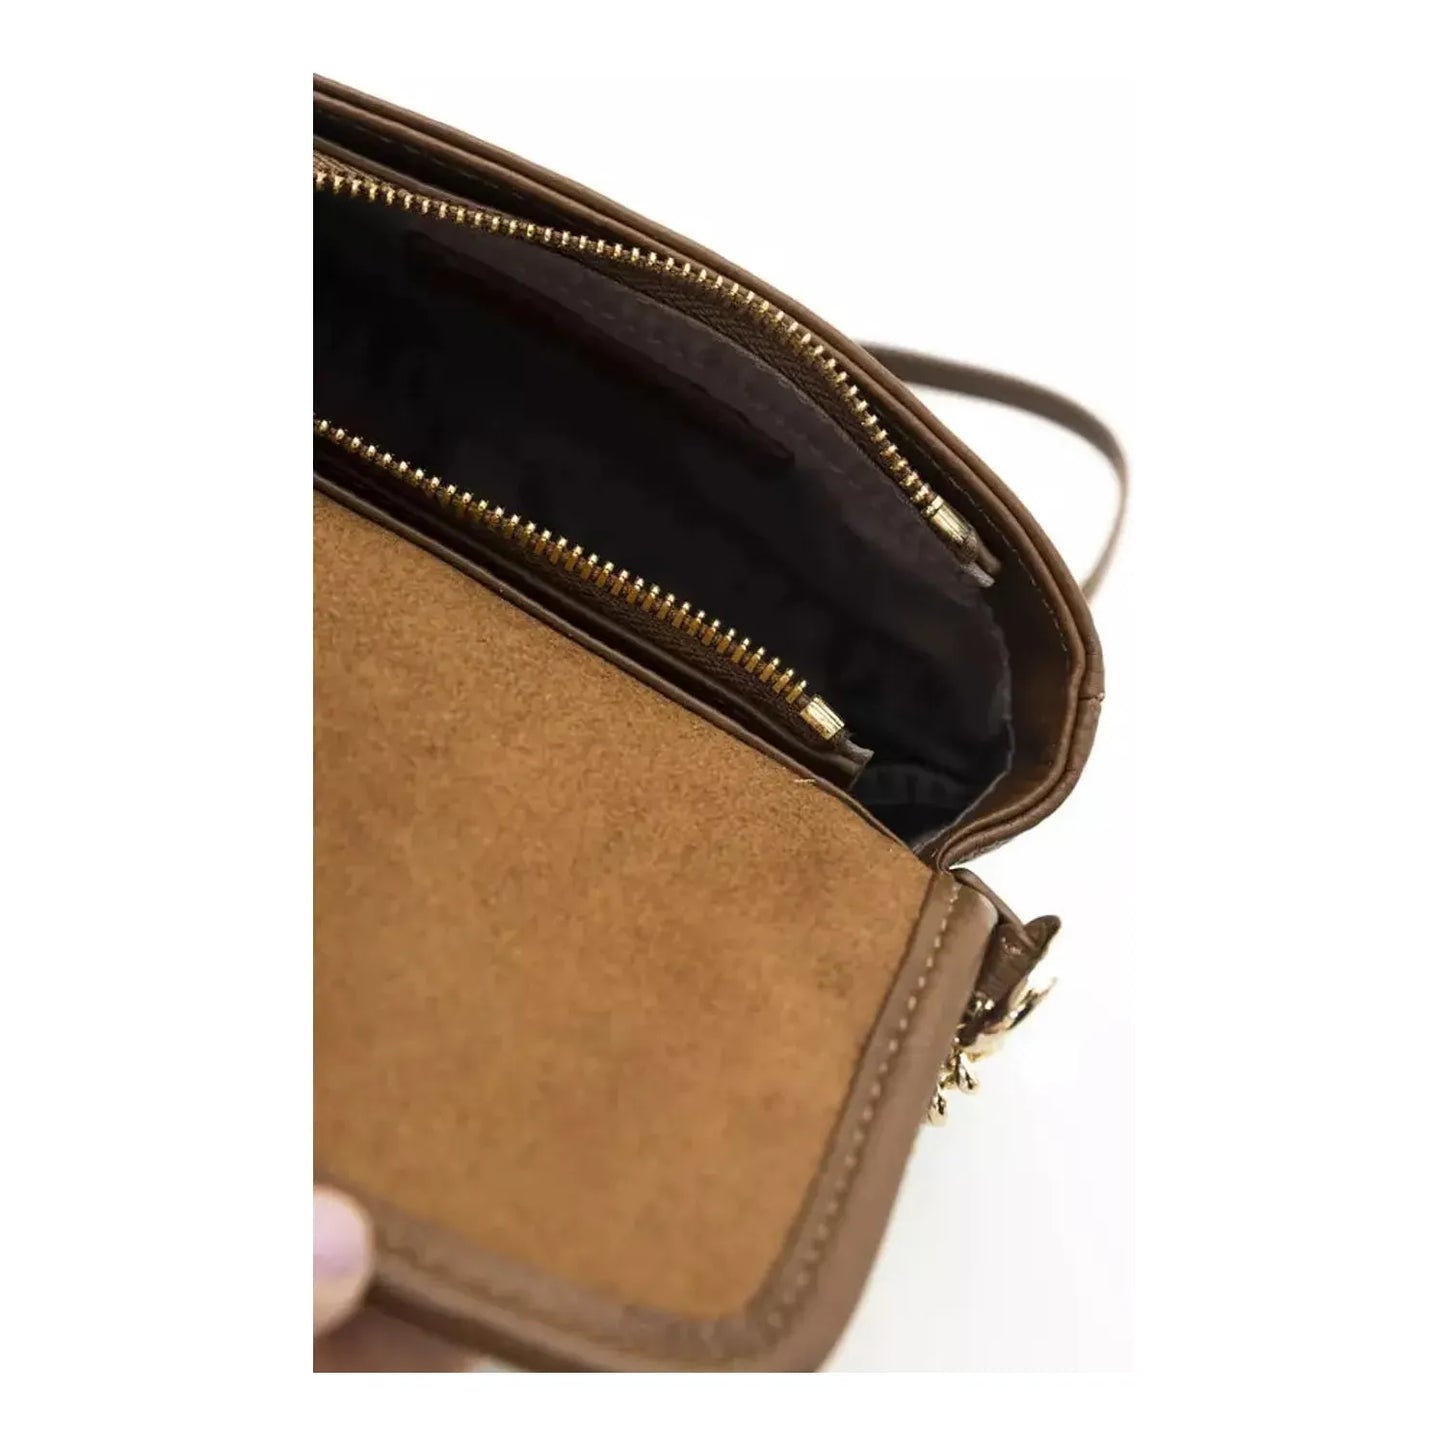 Cerruti 1881 Elegant Double Pocket Leather Crossbody Bag brown-leather-crossbody-bag